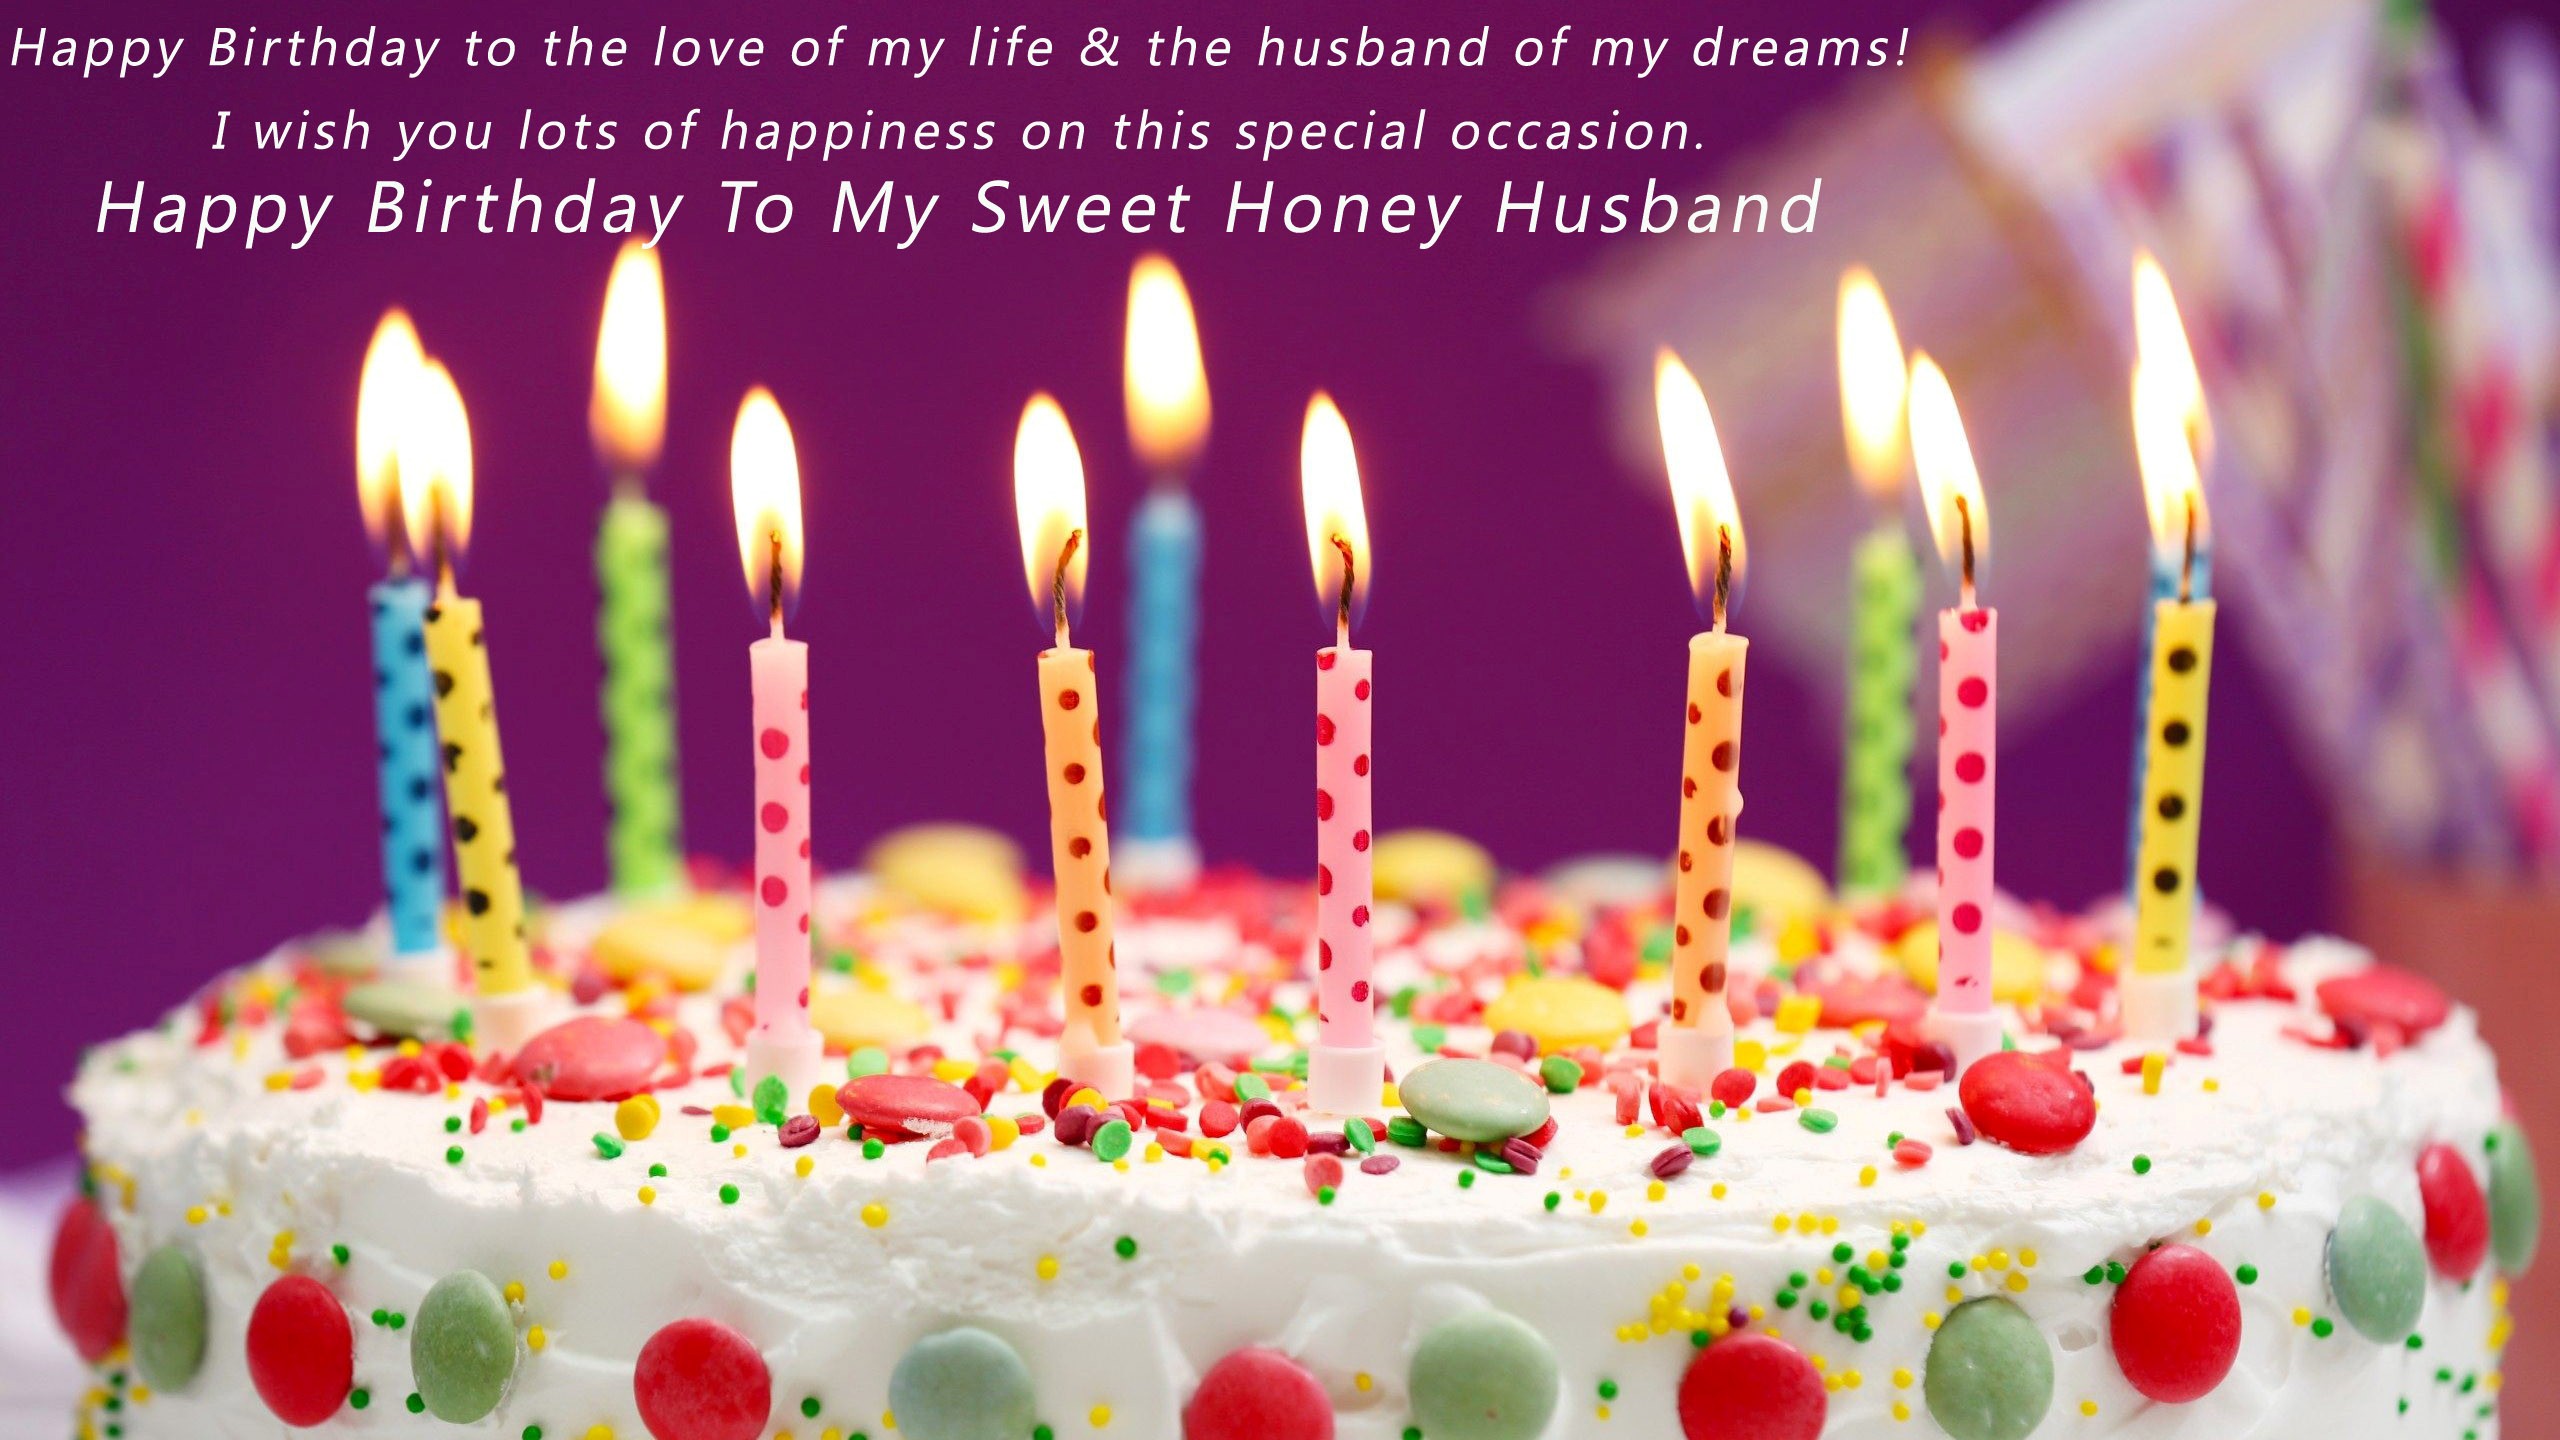 Wish You Happy Birthday My Sweet Honey Husband - Cake Hd Images Download - HD Wallpaper 